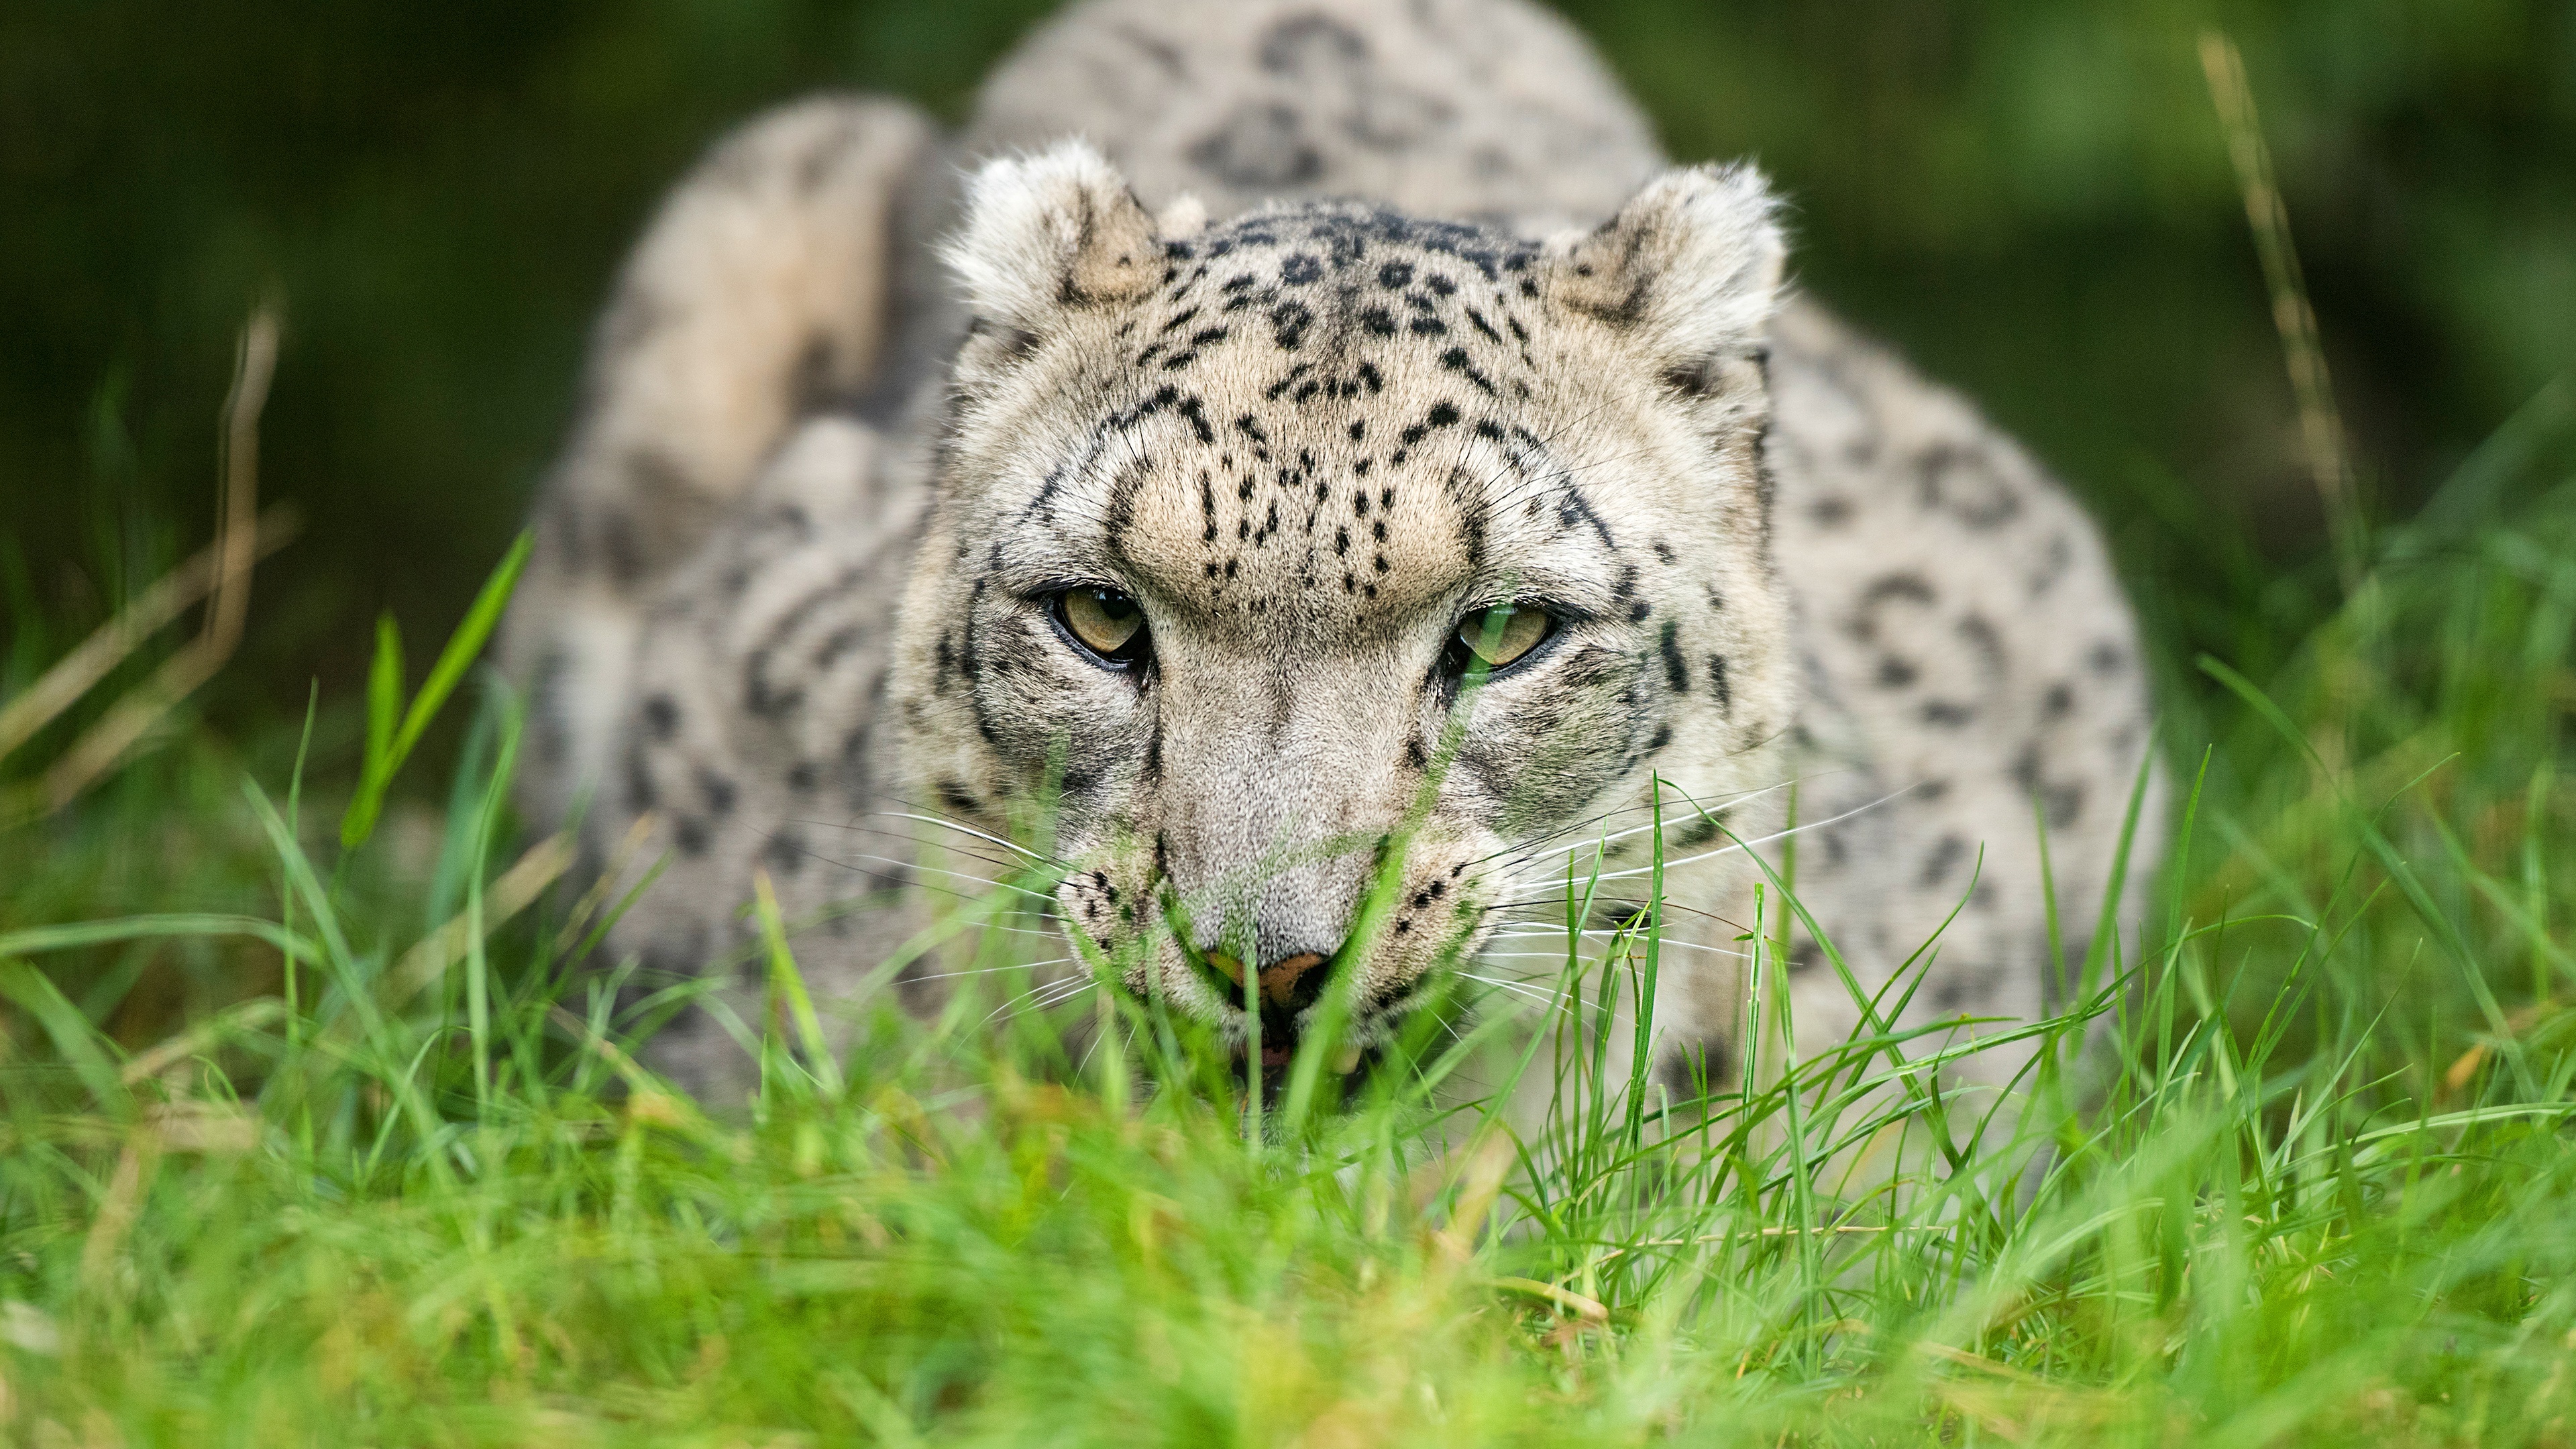 Snow leopard glance 4k, 1440p resolution, Wallpapers images photos, 3840x2160 4K Desktop